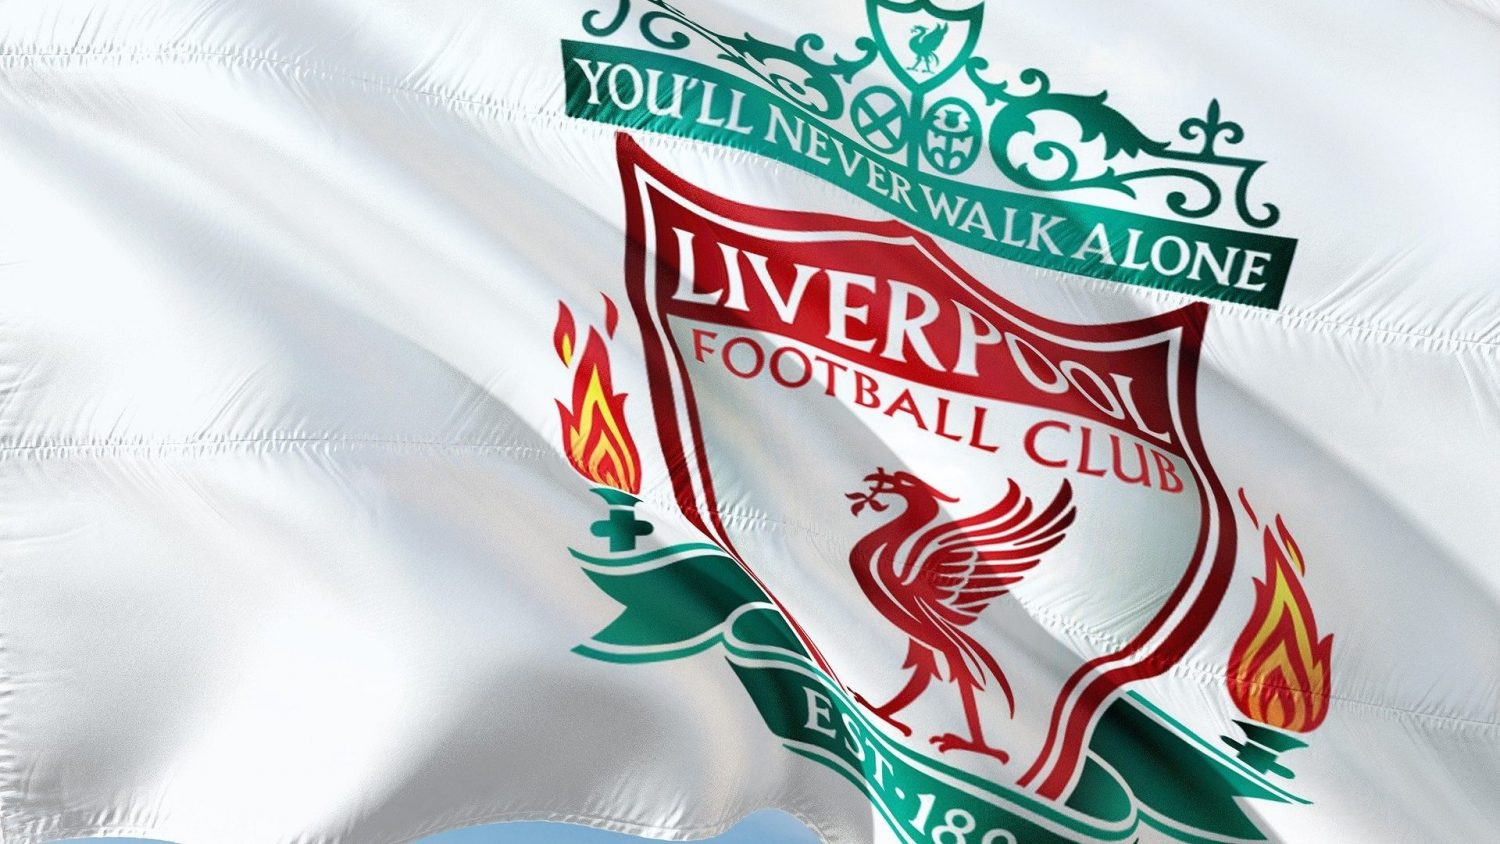 Flag of Liverpool football club